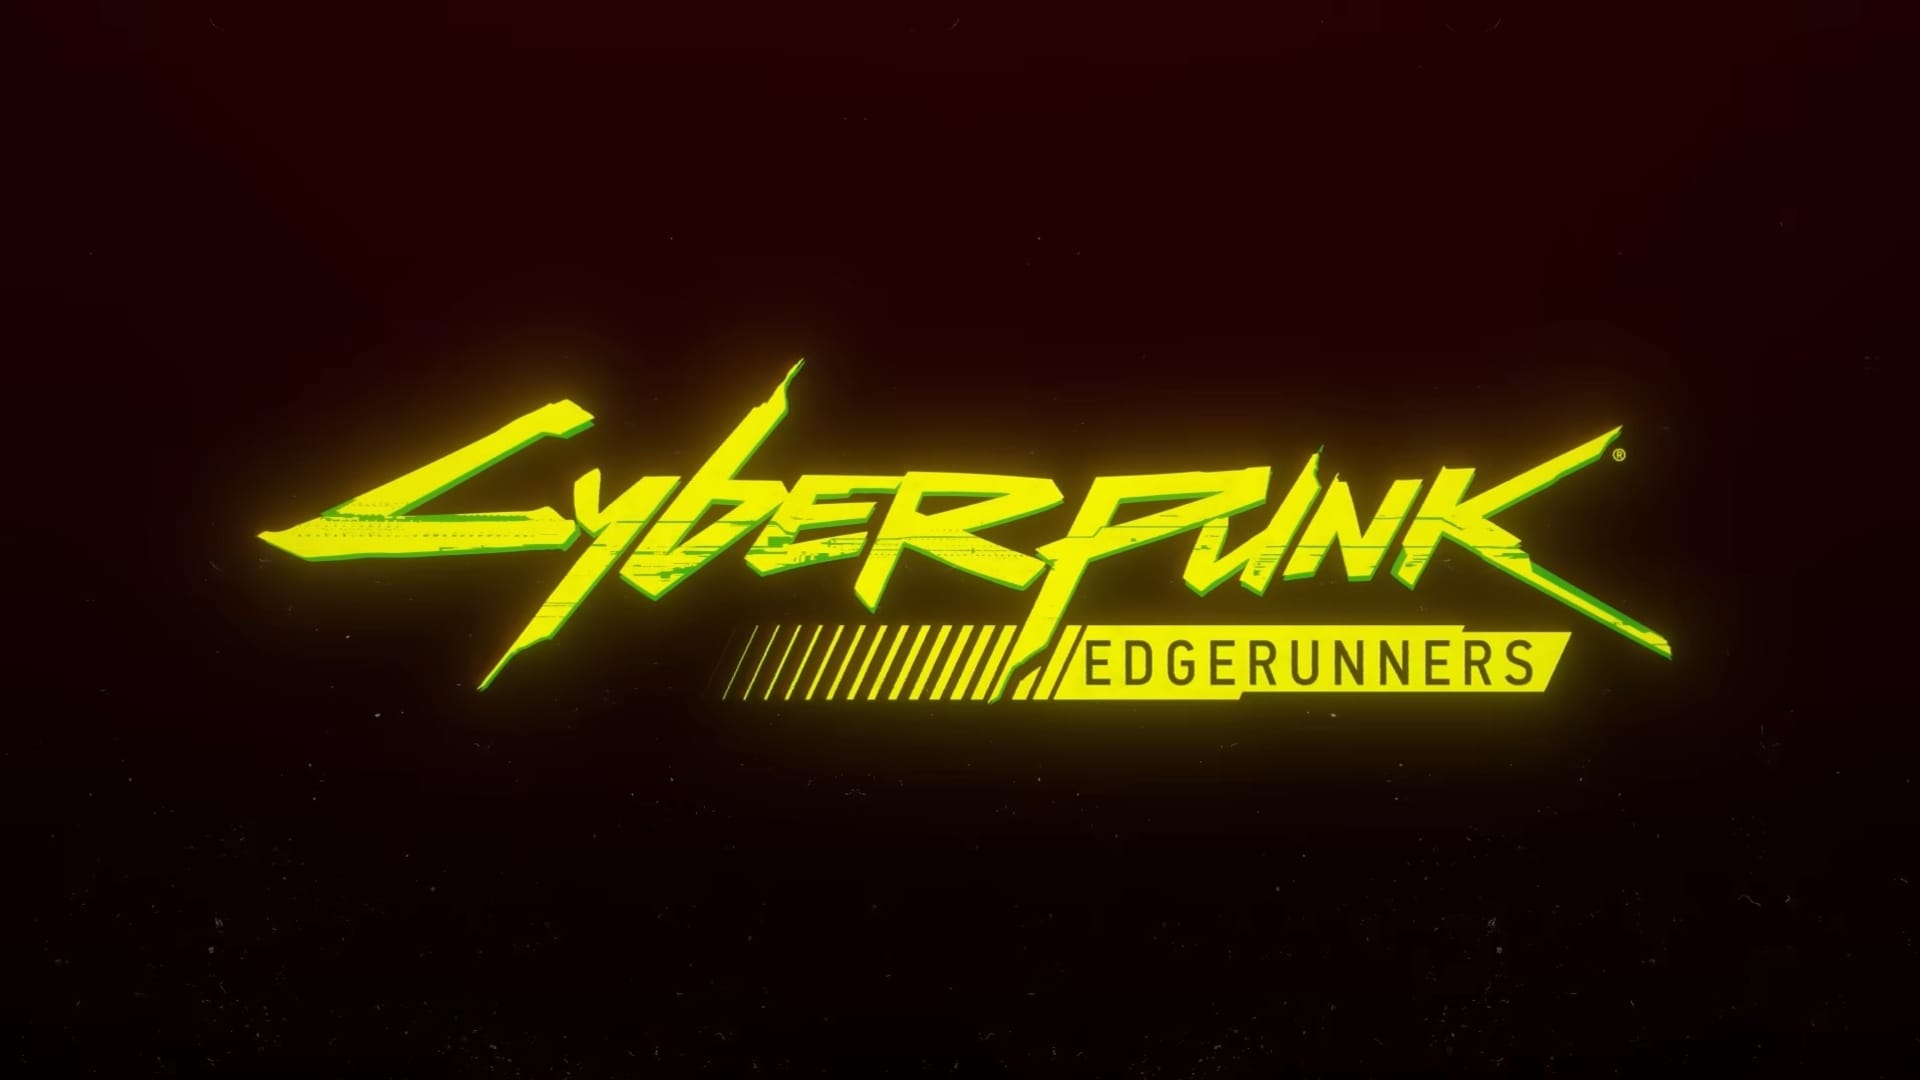 Cyberpunk: Edgerunners (ONA) - Anime News Network